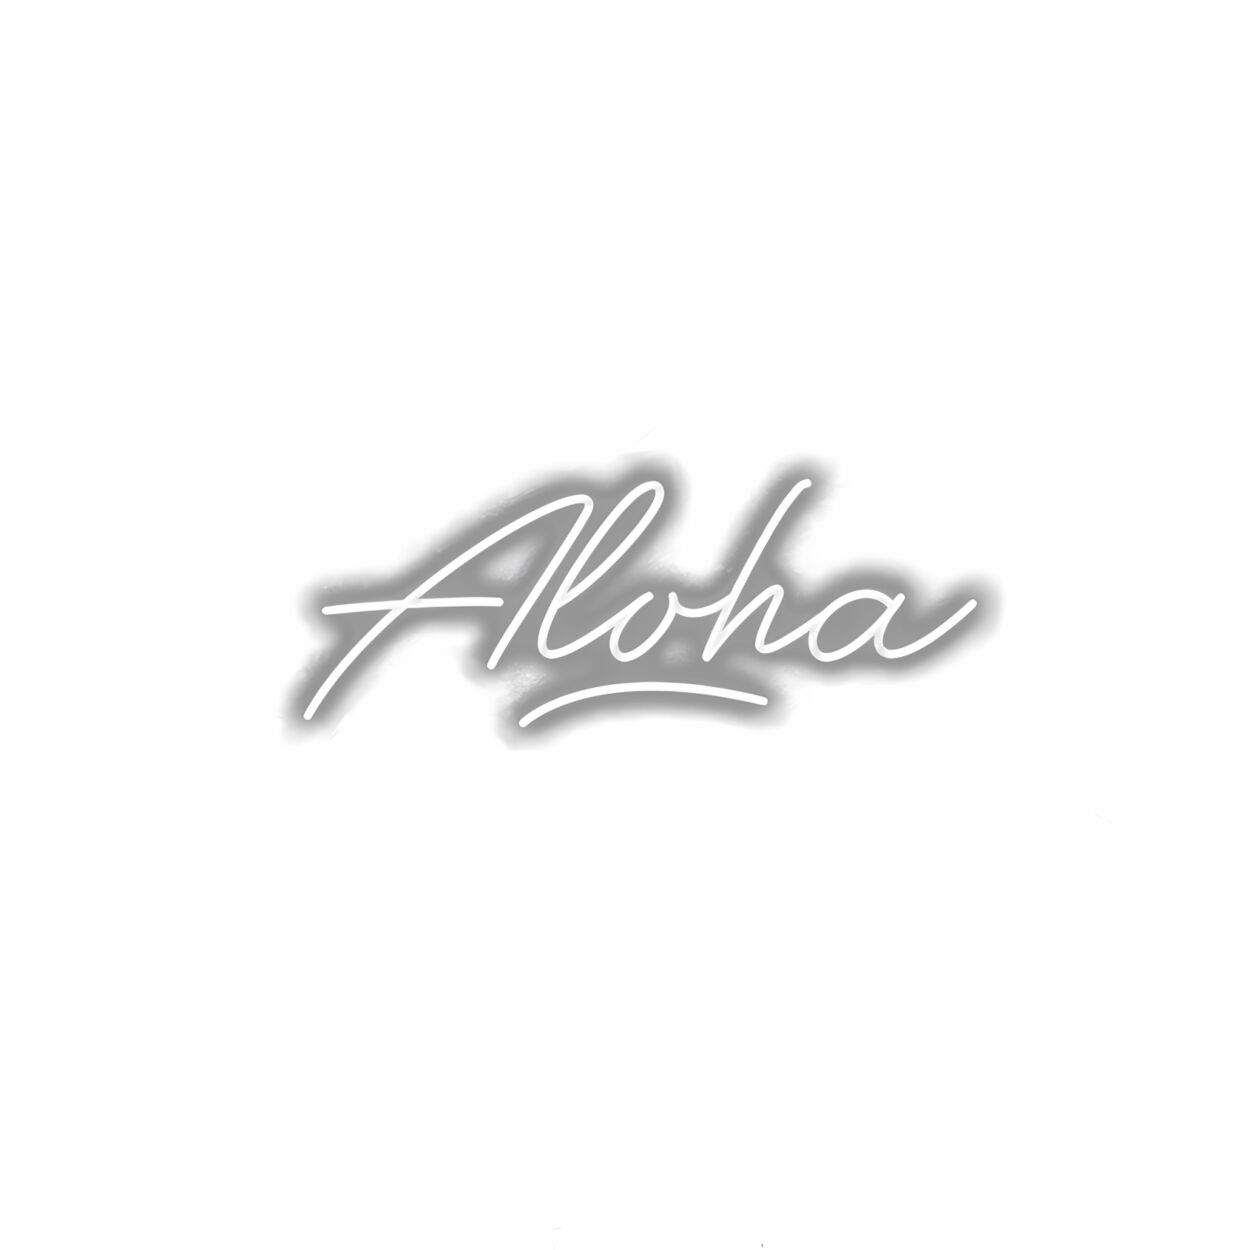 Aloha" handwritten word shadow effect on white background.